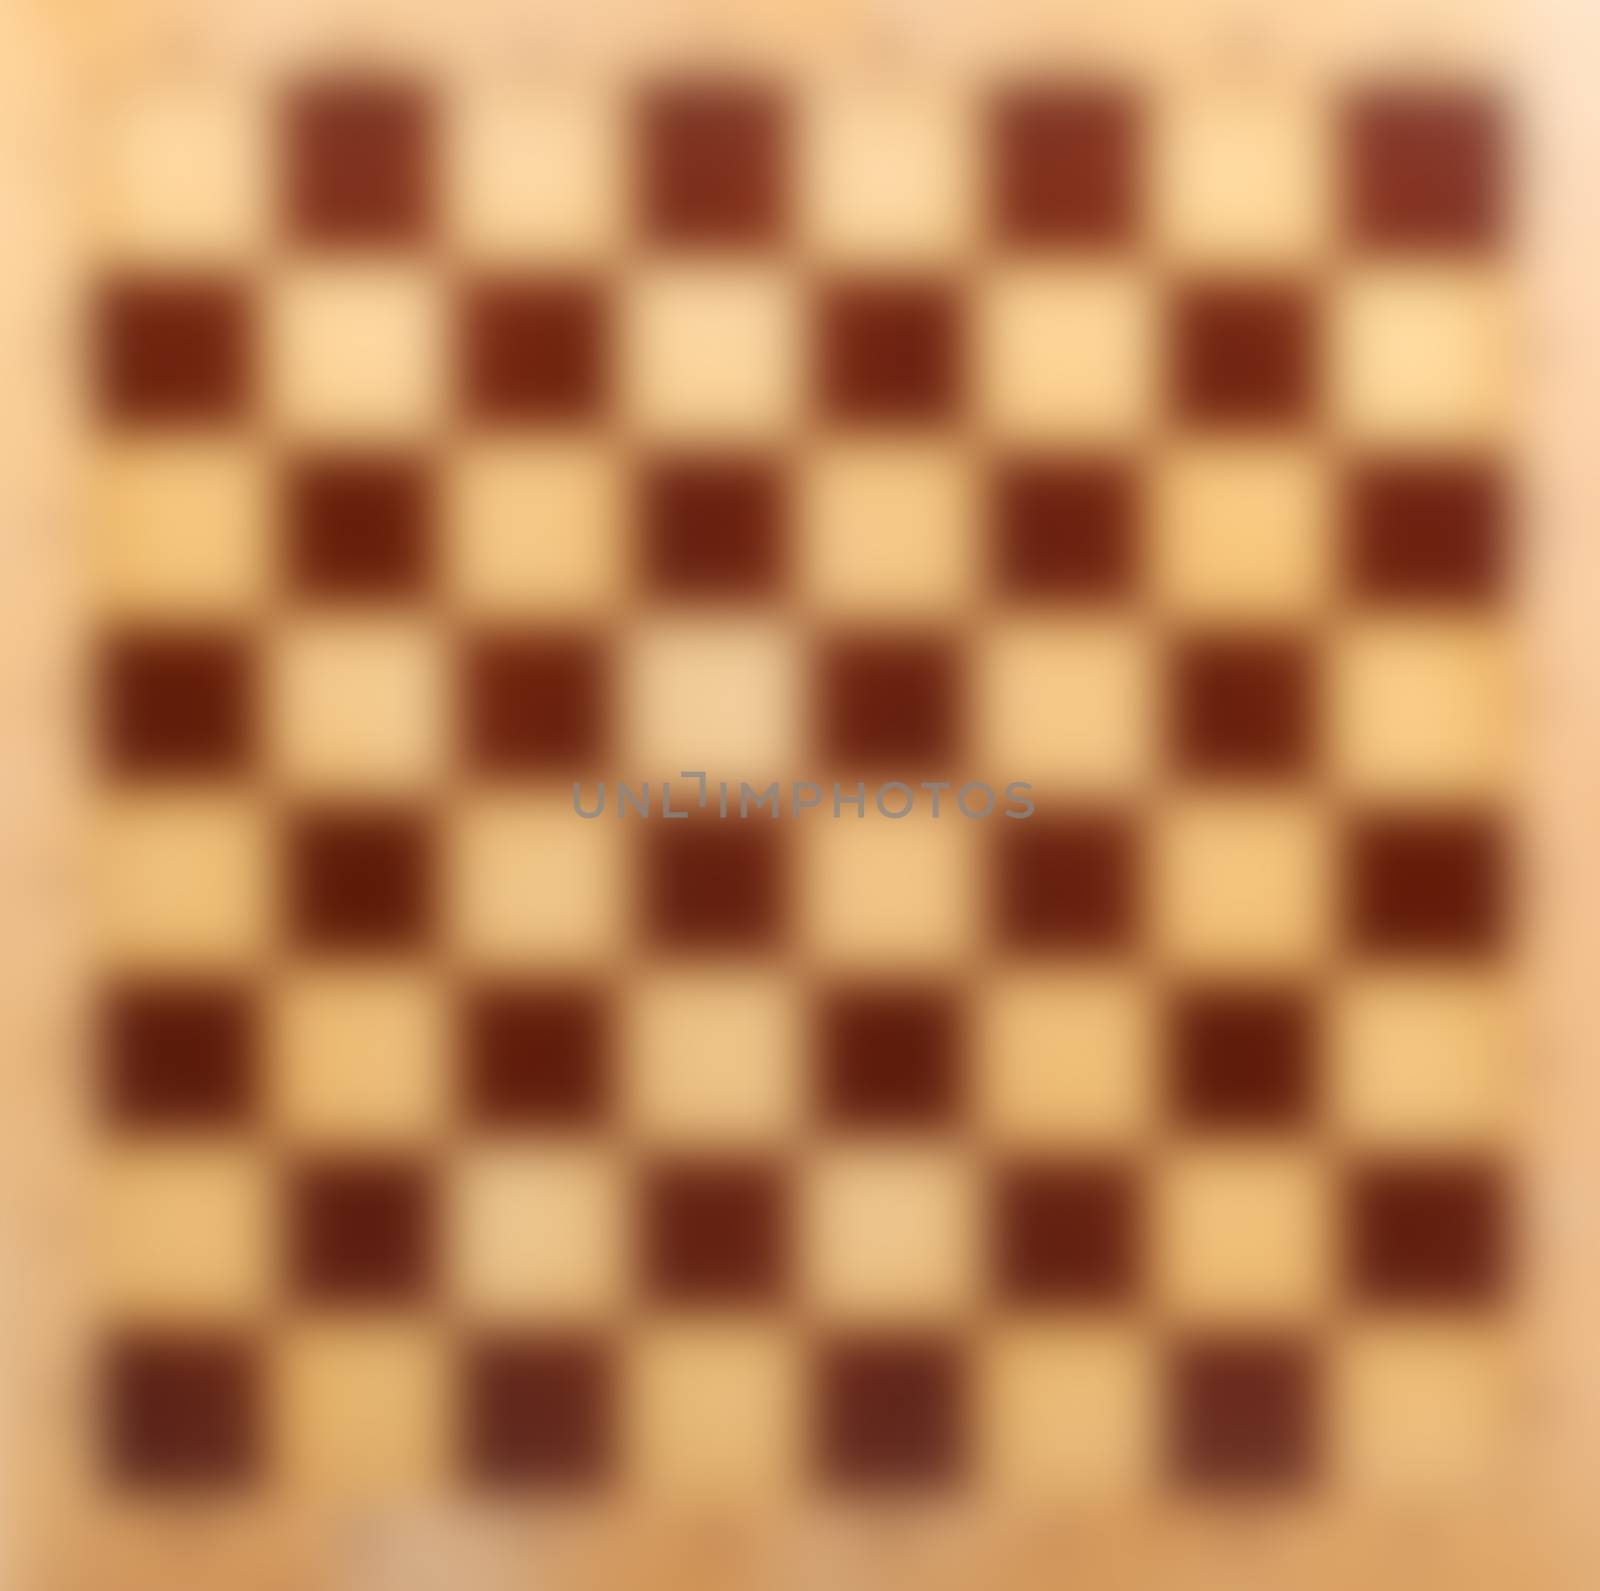 Abstract blur wooden chessboard bokeh background by motorolka